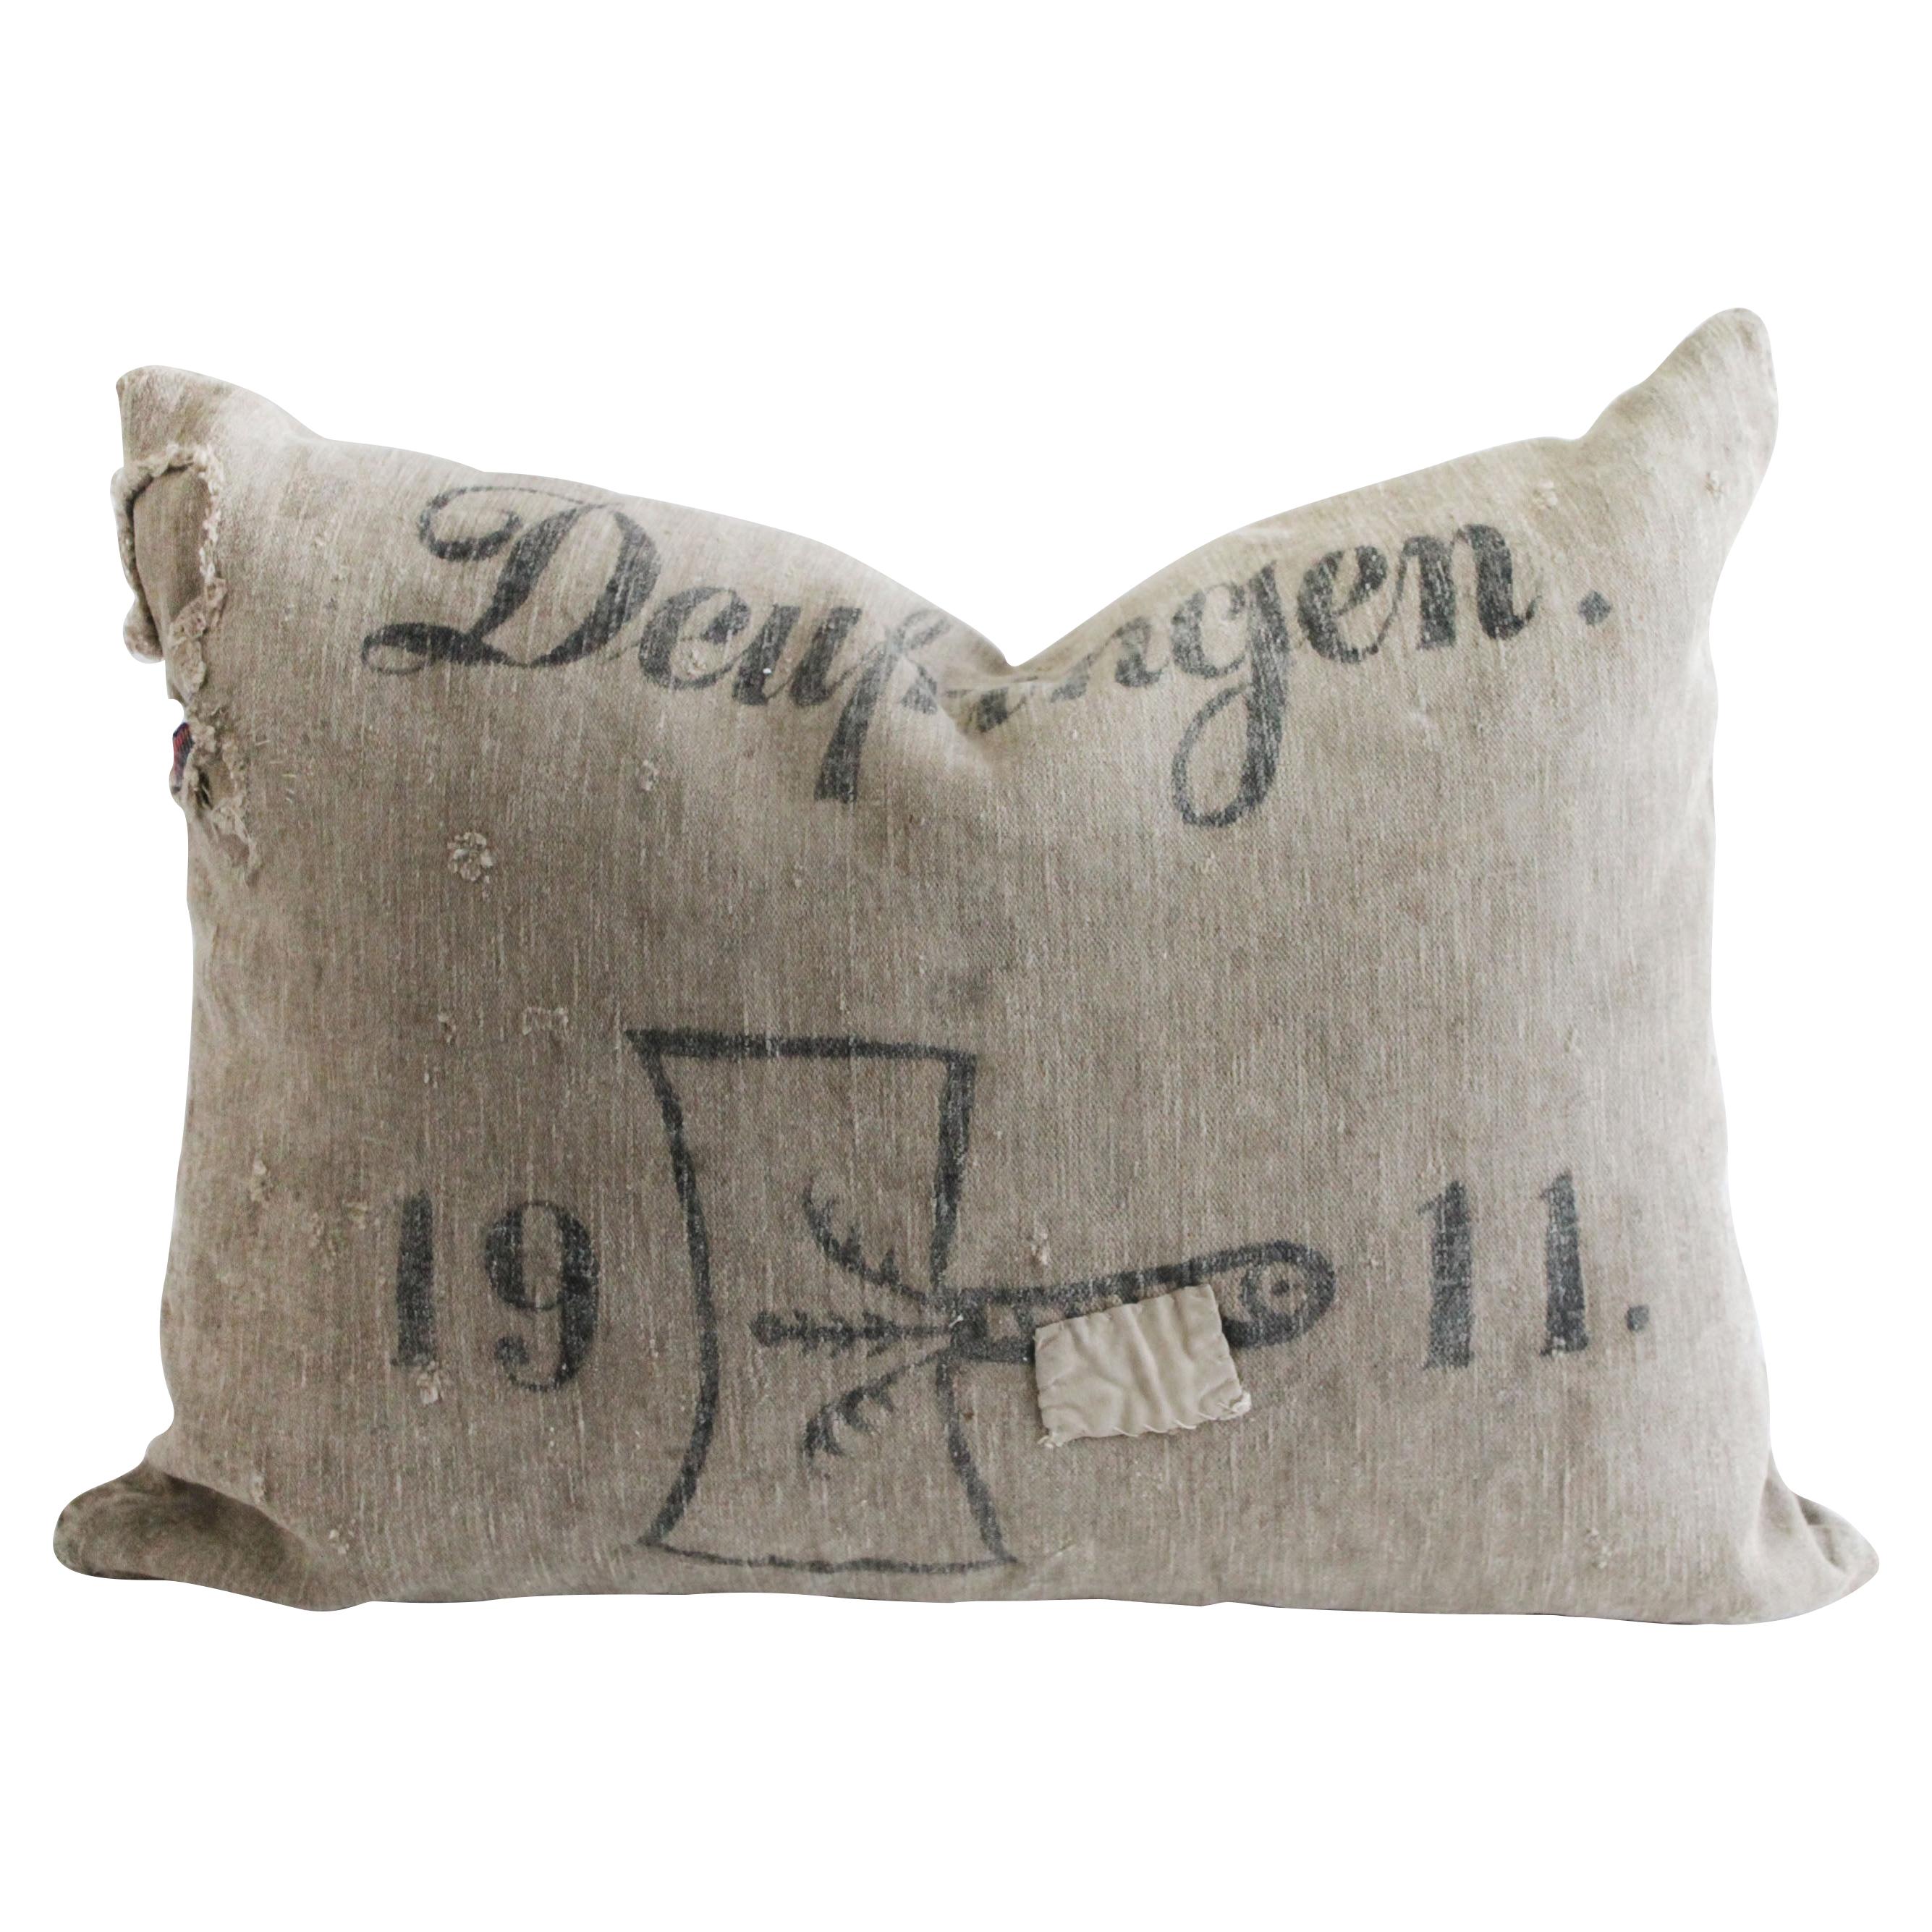 Antique German Grain Sack Linen Pillow with Original Stamped Details